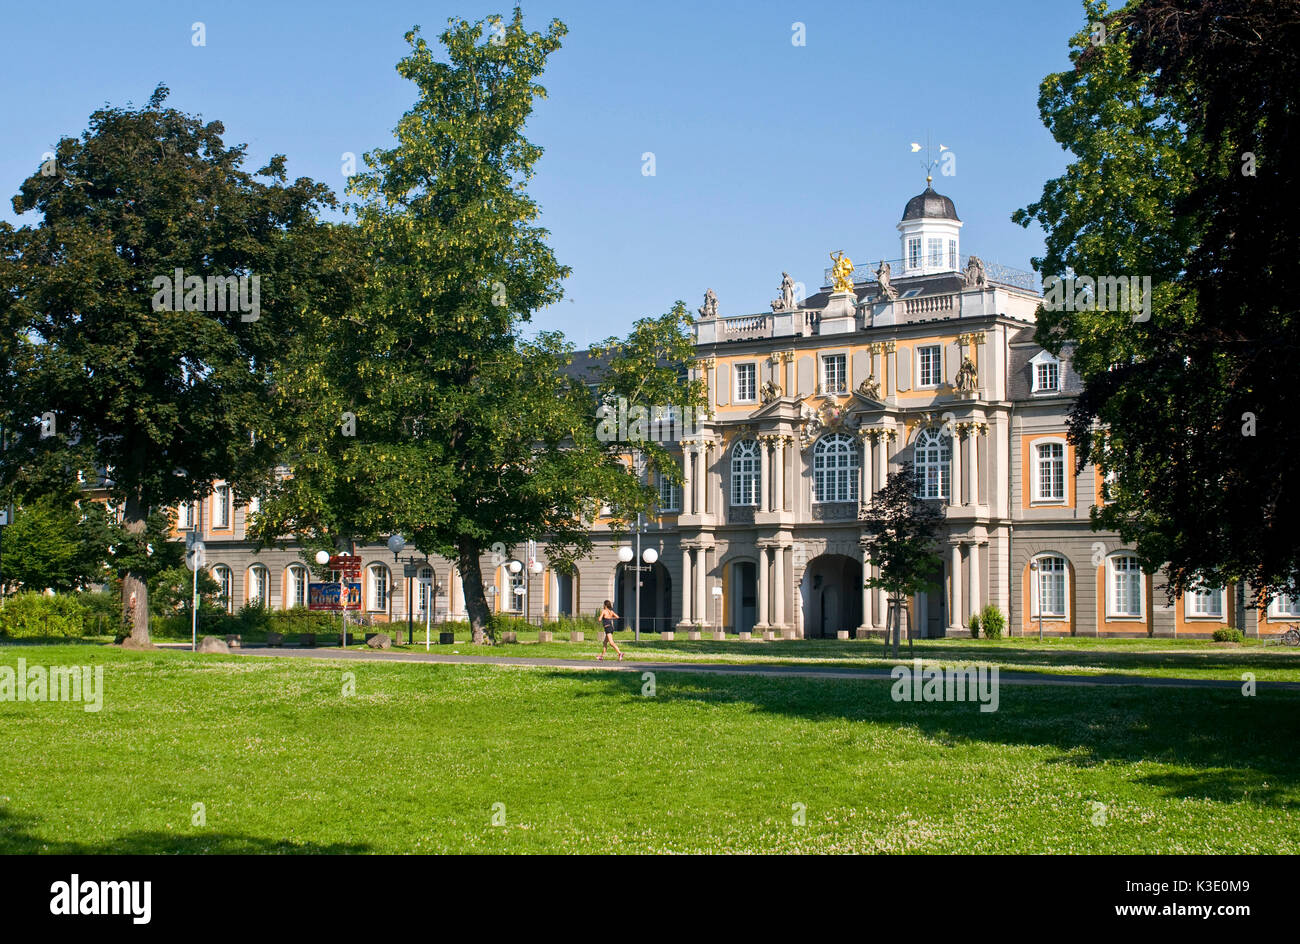 Europe, Germany, North Rhine-Westphalia, Bonn, Old Town, Koblenzer gate, Egyptian museum of the university of Bonn, Stock Photo